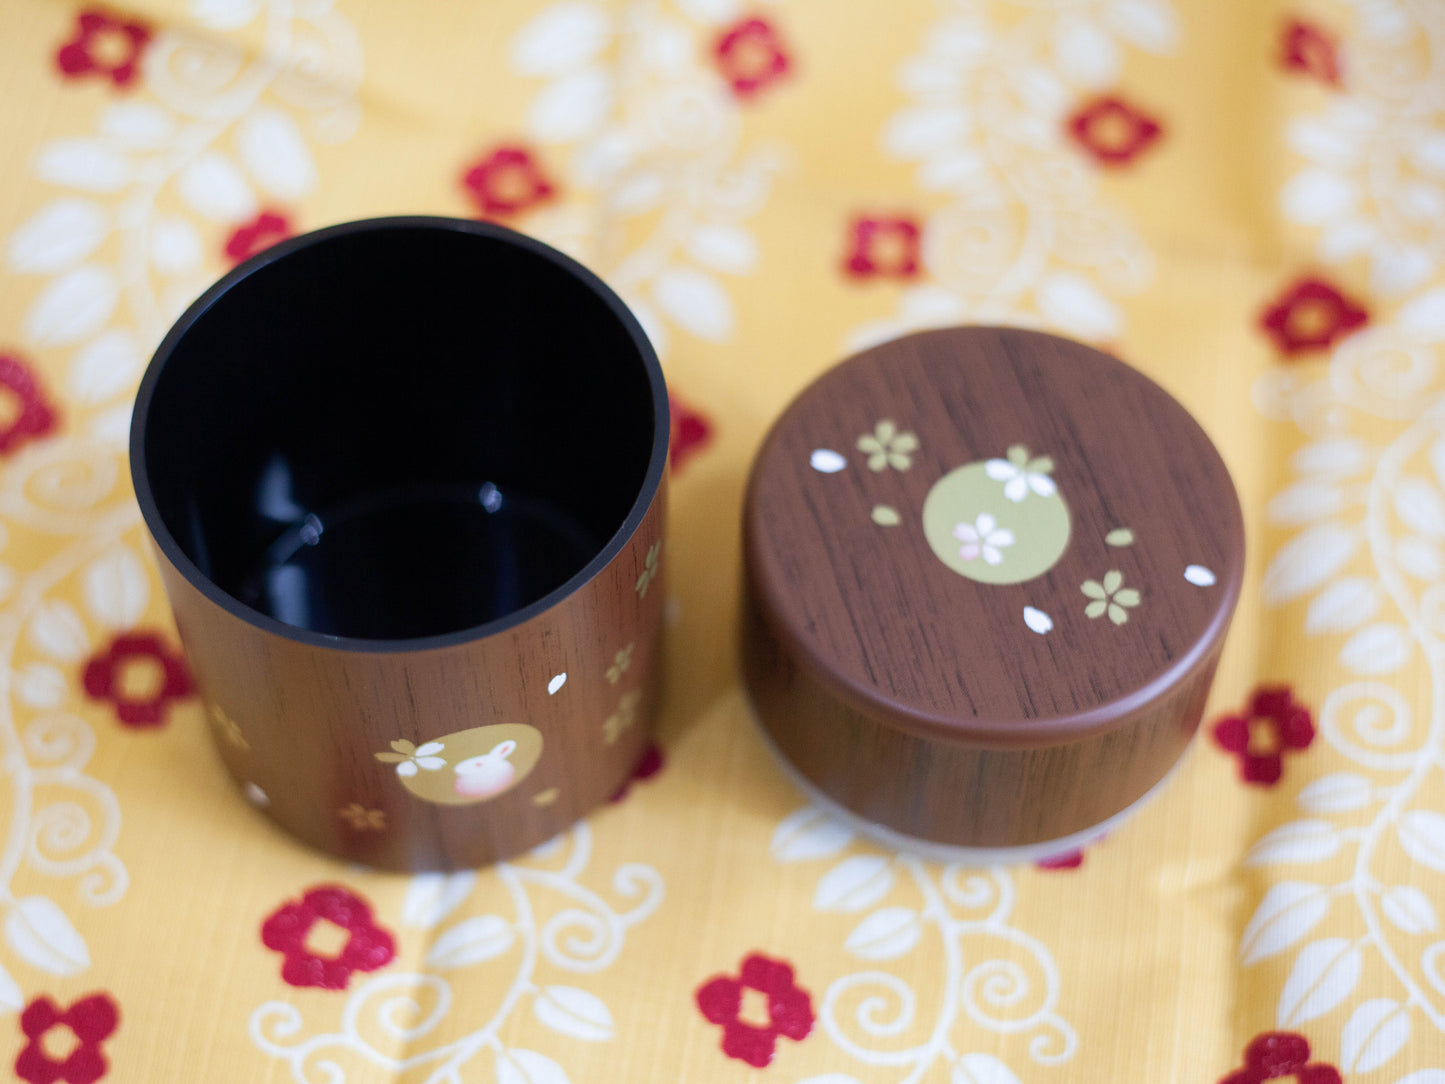 Usagi Woodgrain Tea Canister | Small (250mL)